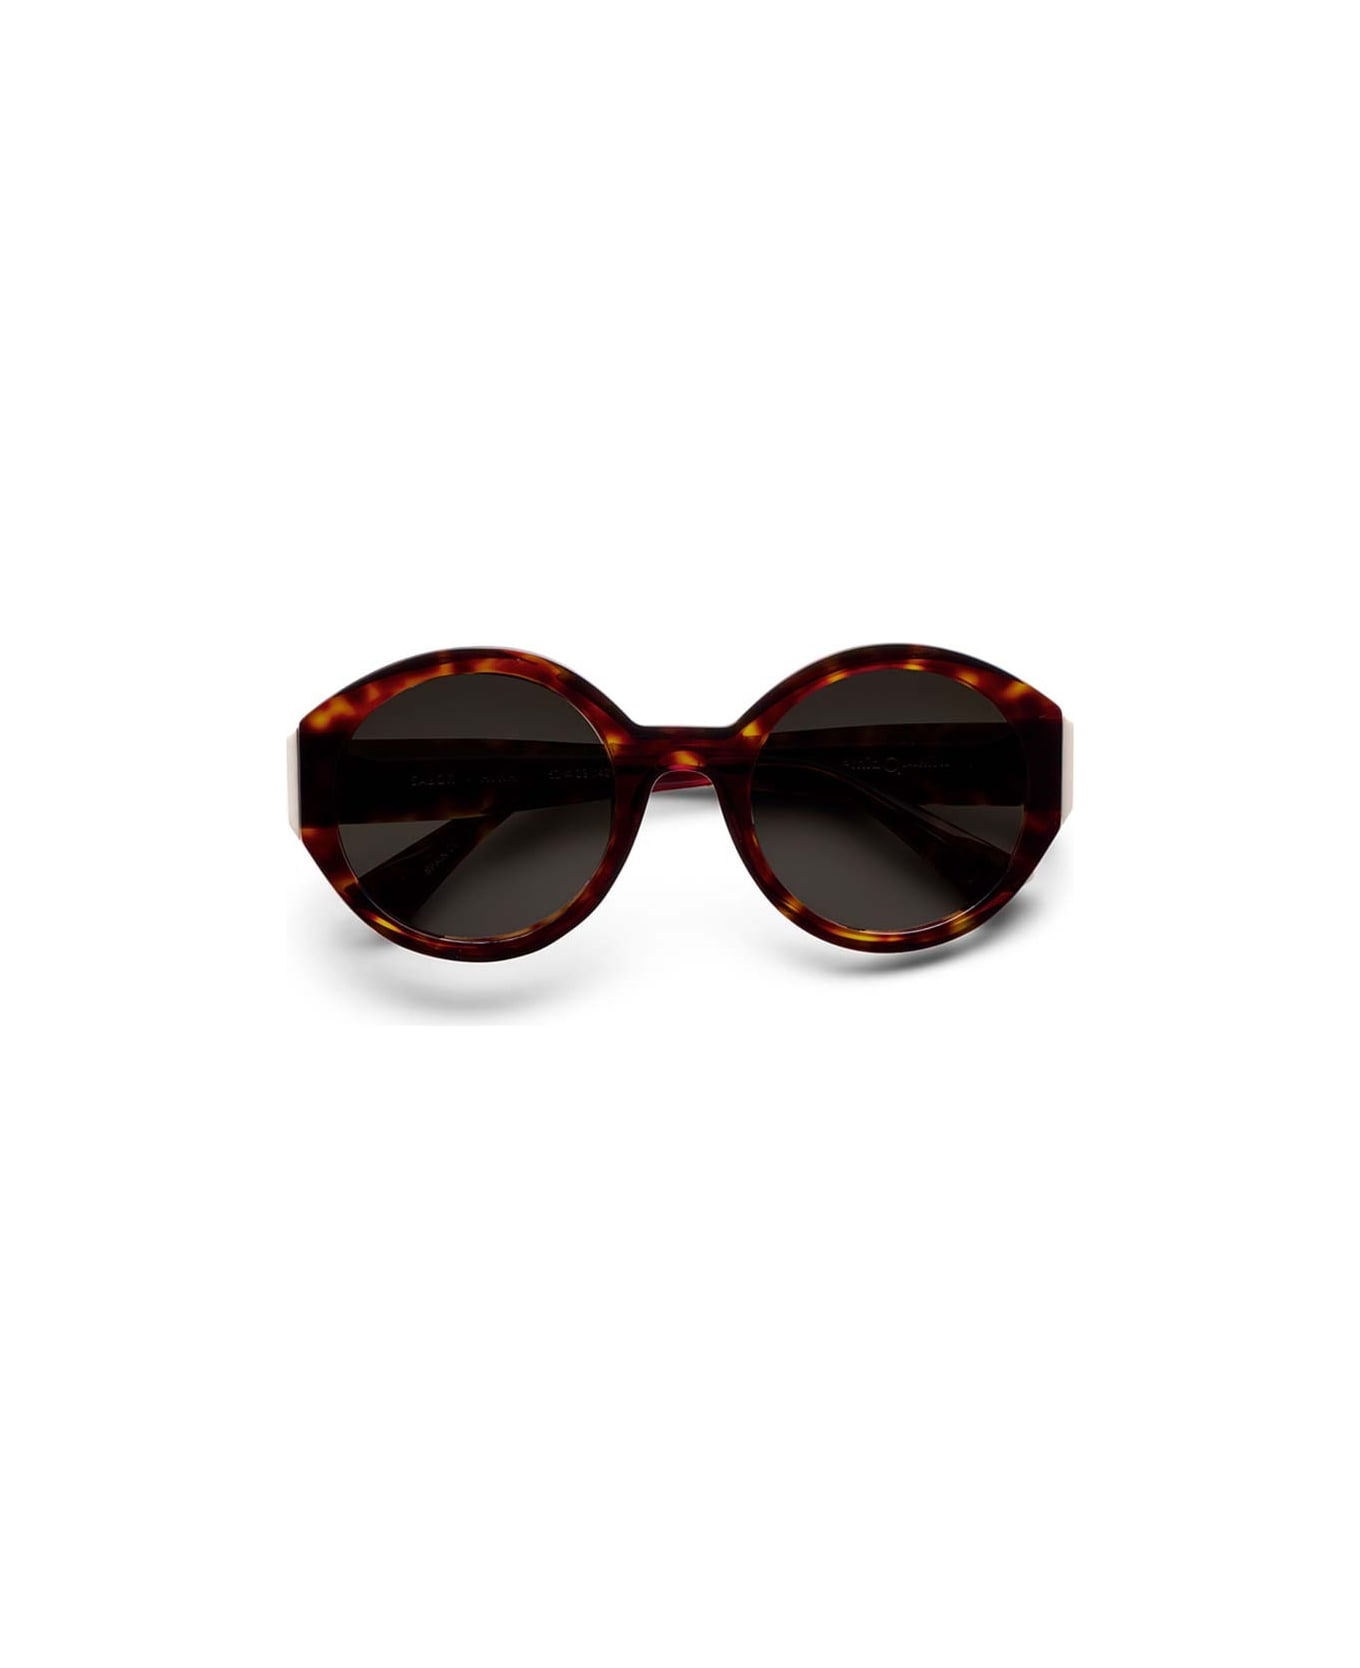 Etnia Barcelona Sunglasses - Havana/Marrone サングラス